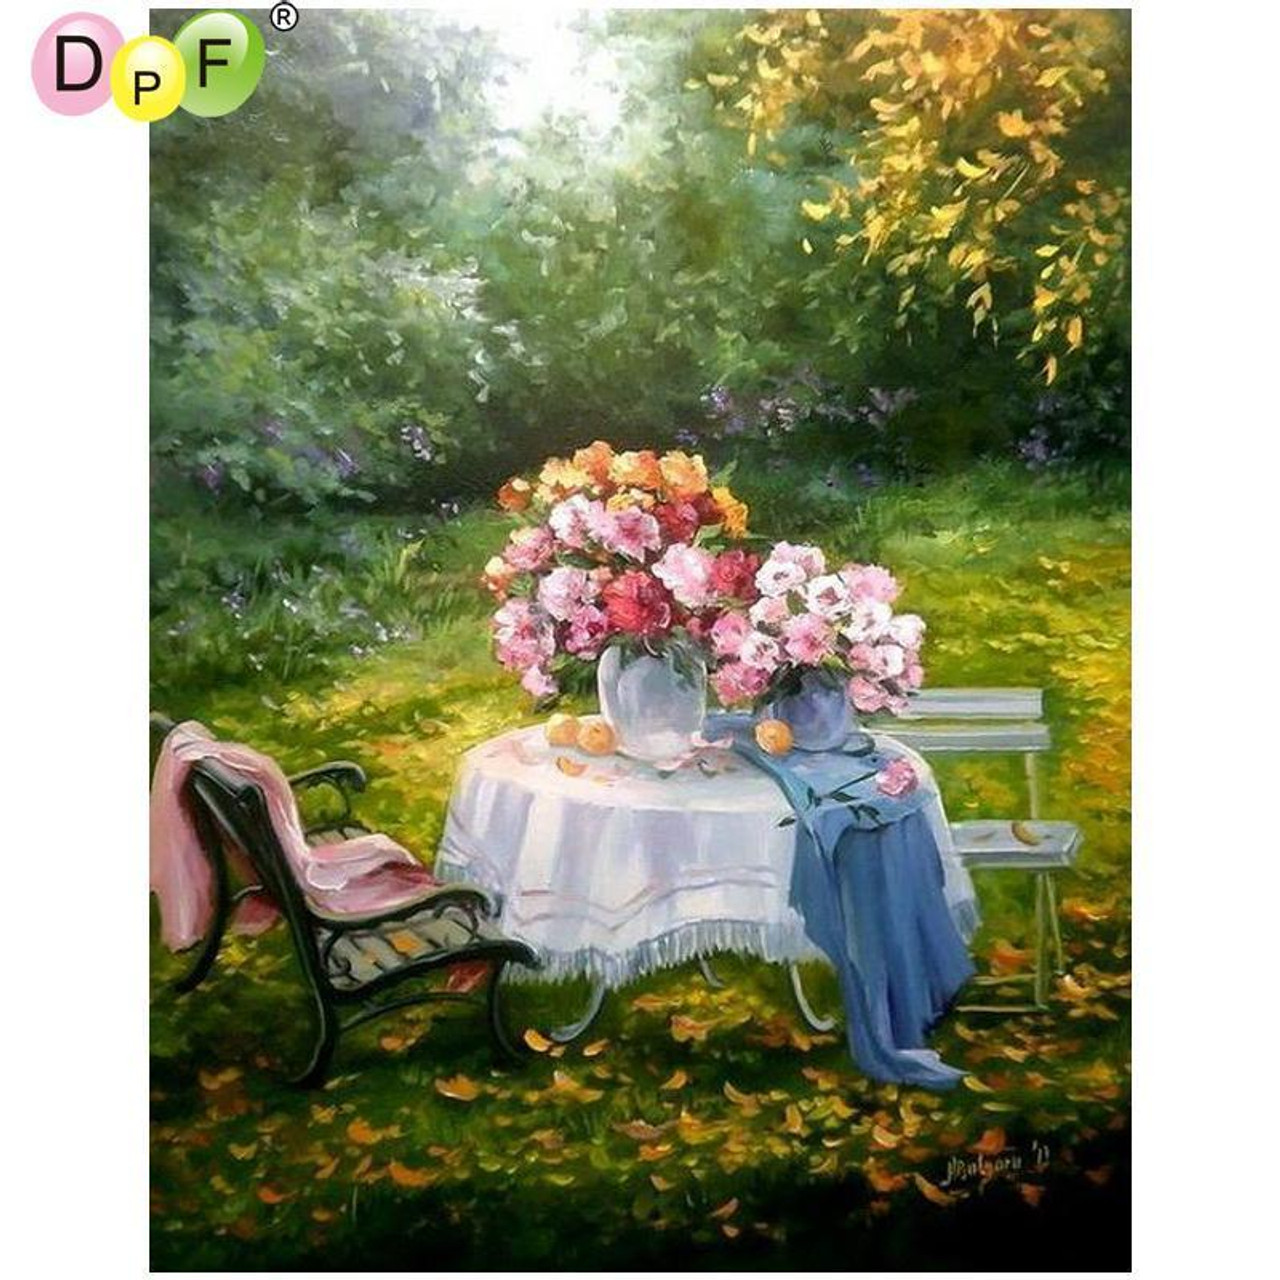 5D Diamond Painting Table Flower Centerpiece Kit